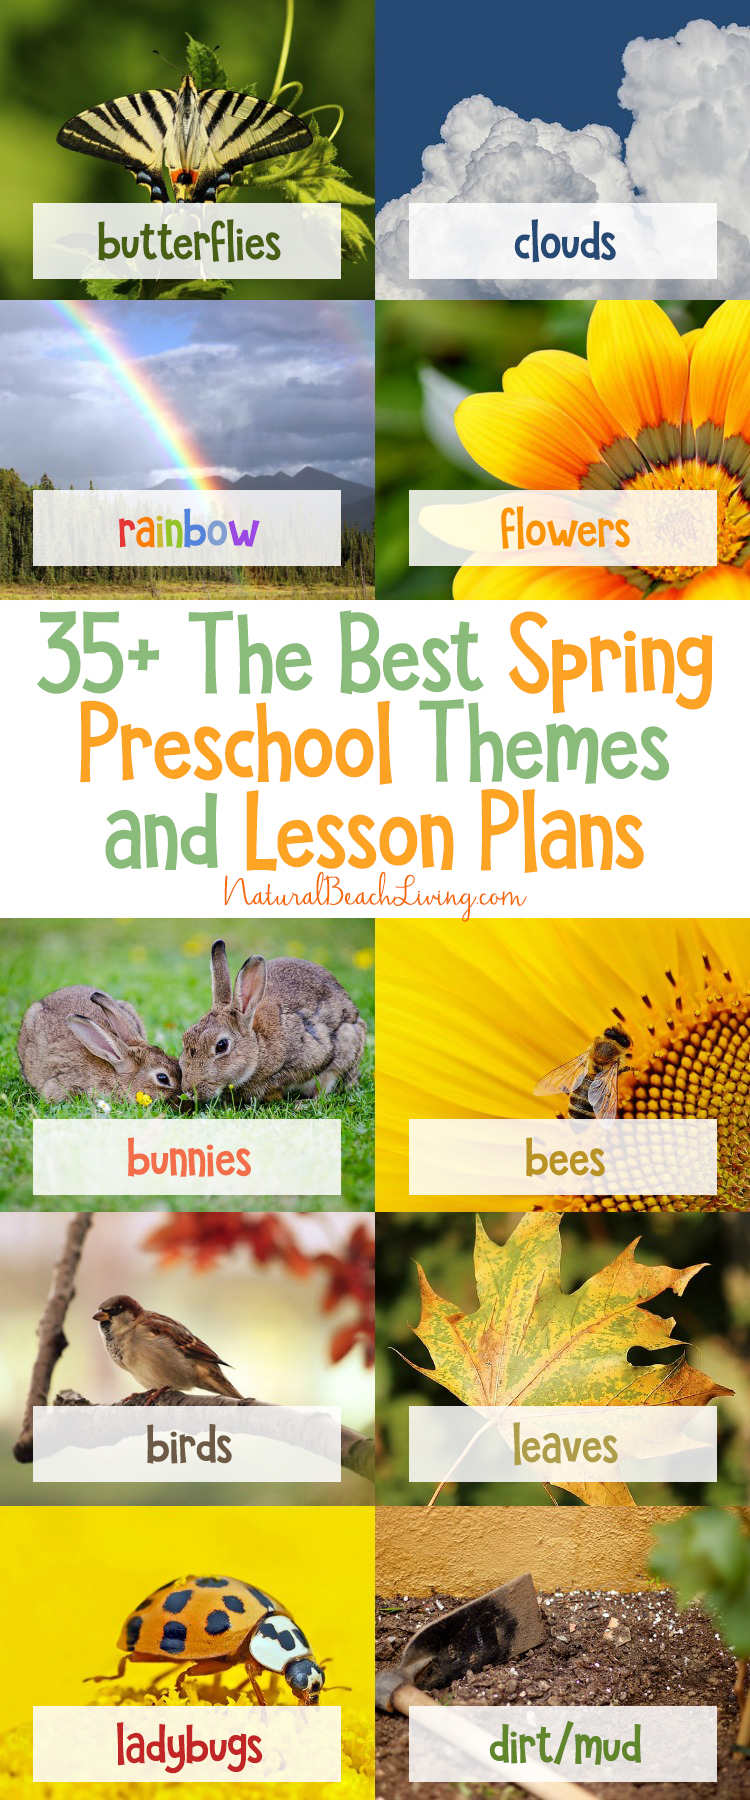 The Best Spring Preschool Themes and Lesson Plans, Free Printable, Life cycles, Flower activities, Farm, Preschool books, Pond Theme, Animal habitats